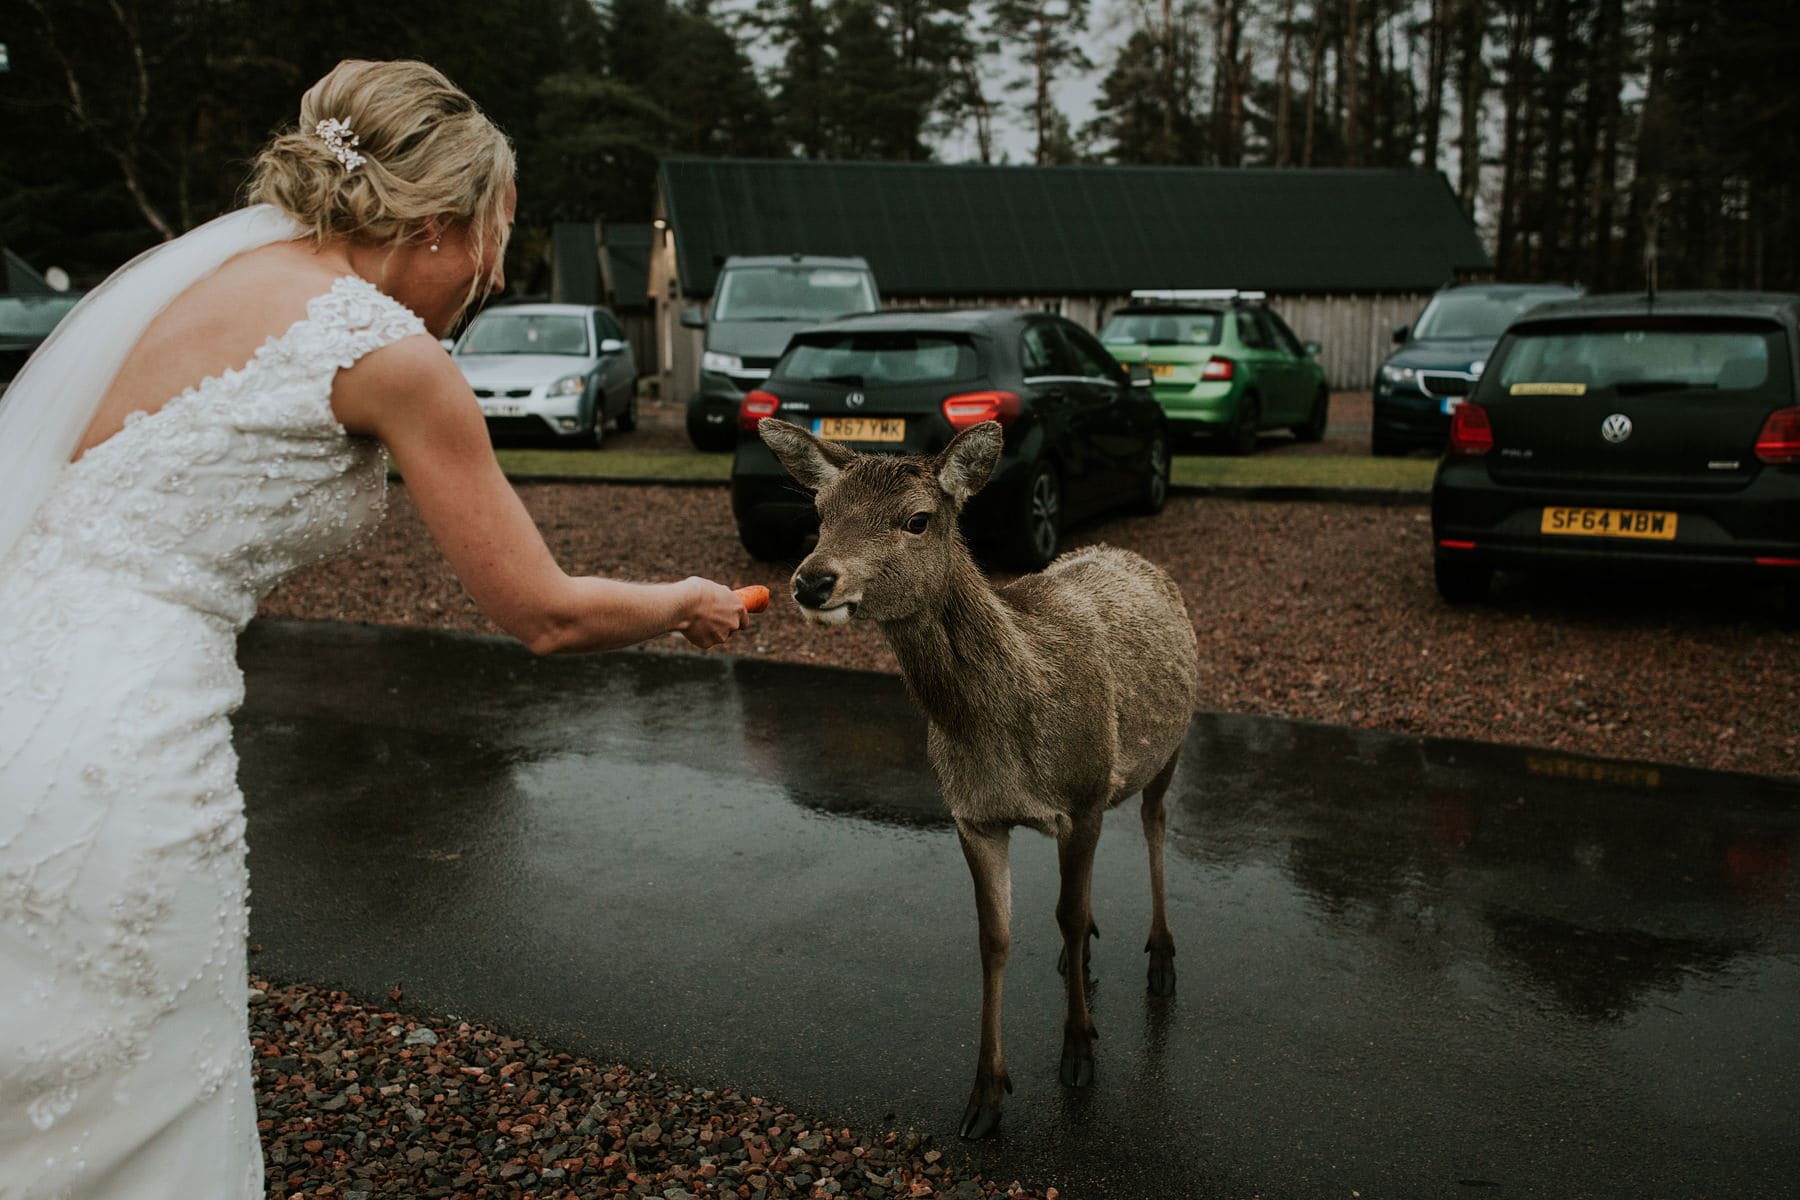 Feeding deer at The Kingshouse Hotel